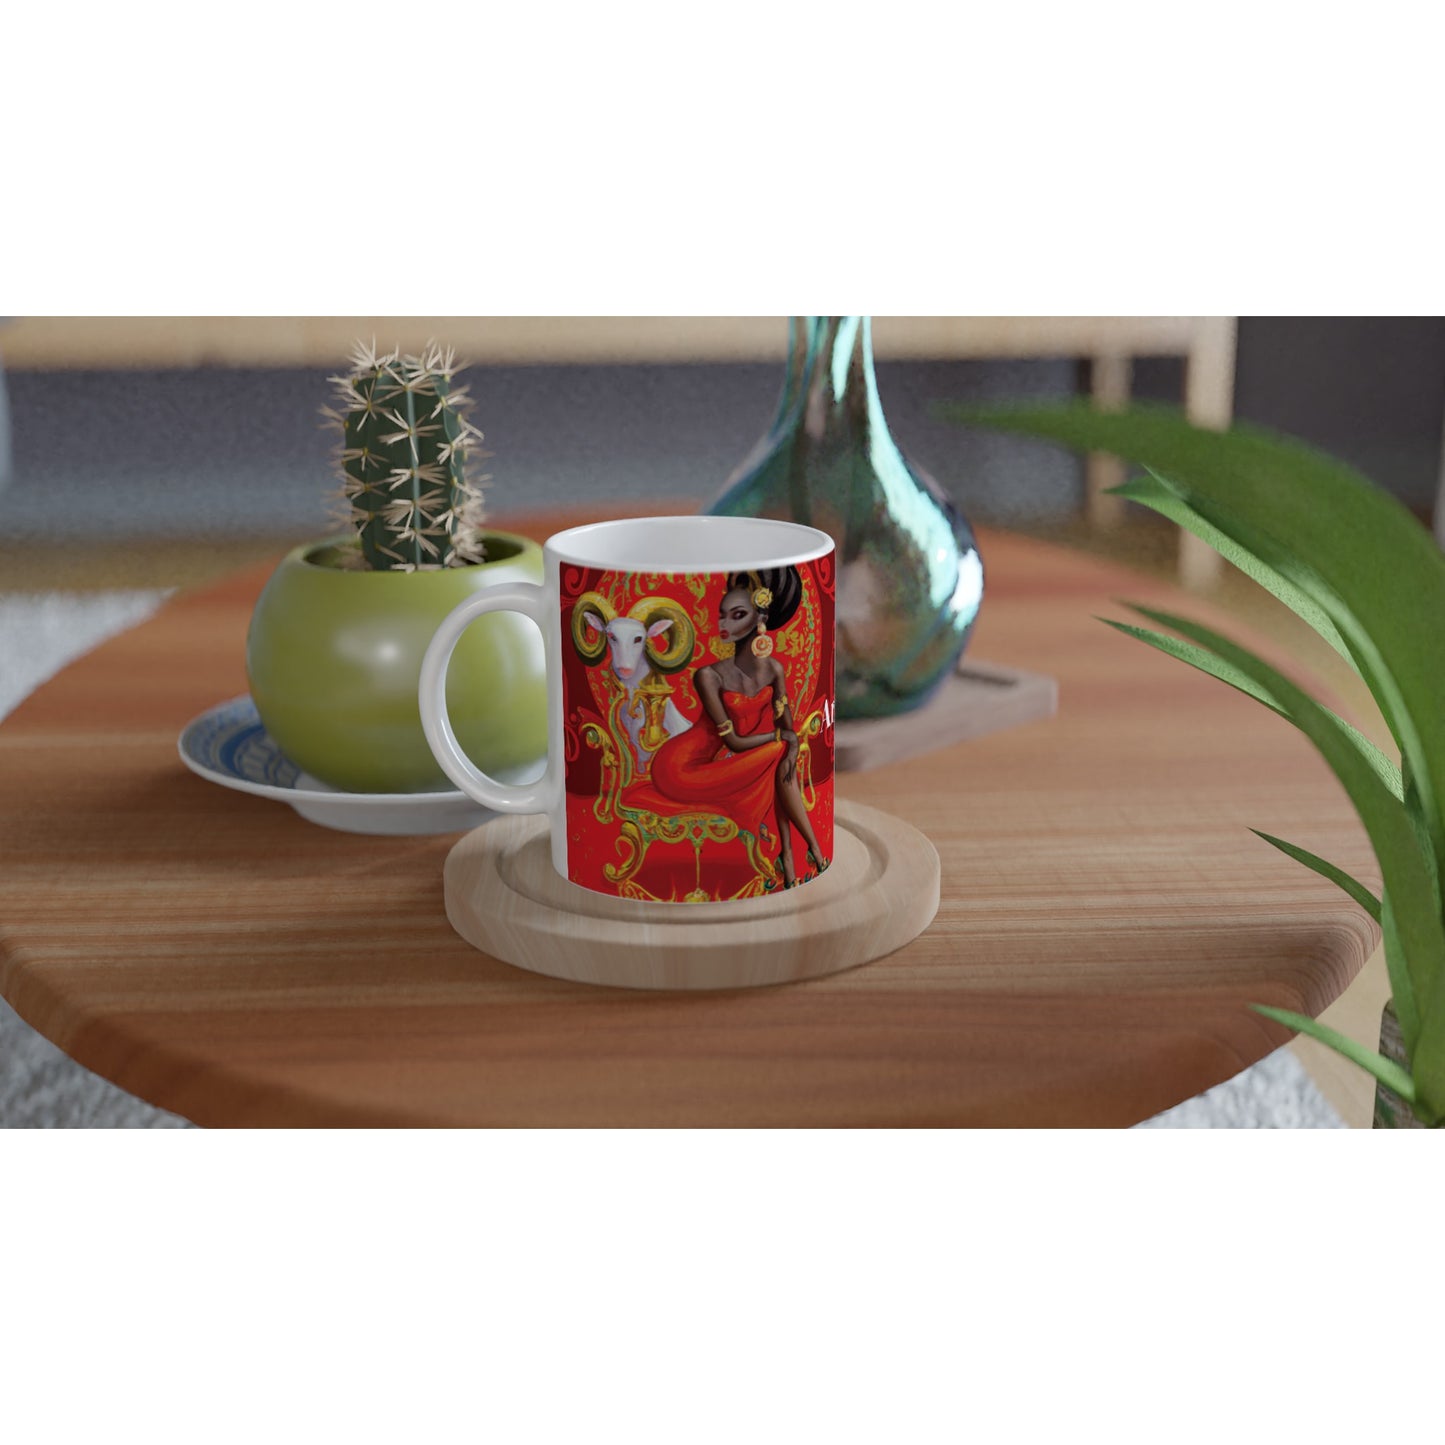 First Lady Aries Ceramic Mug -11oz